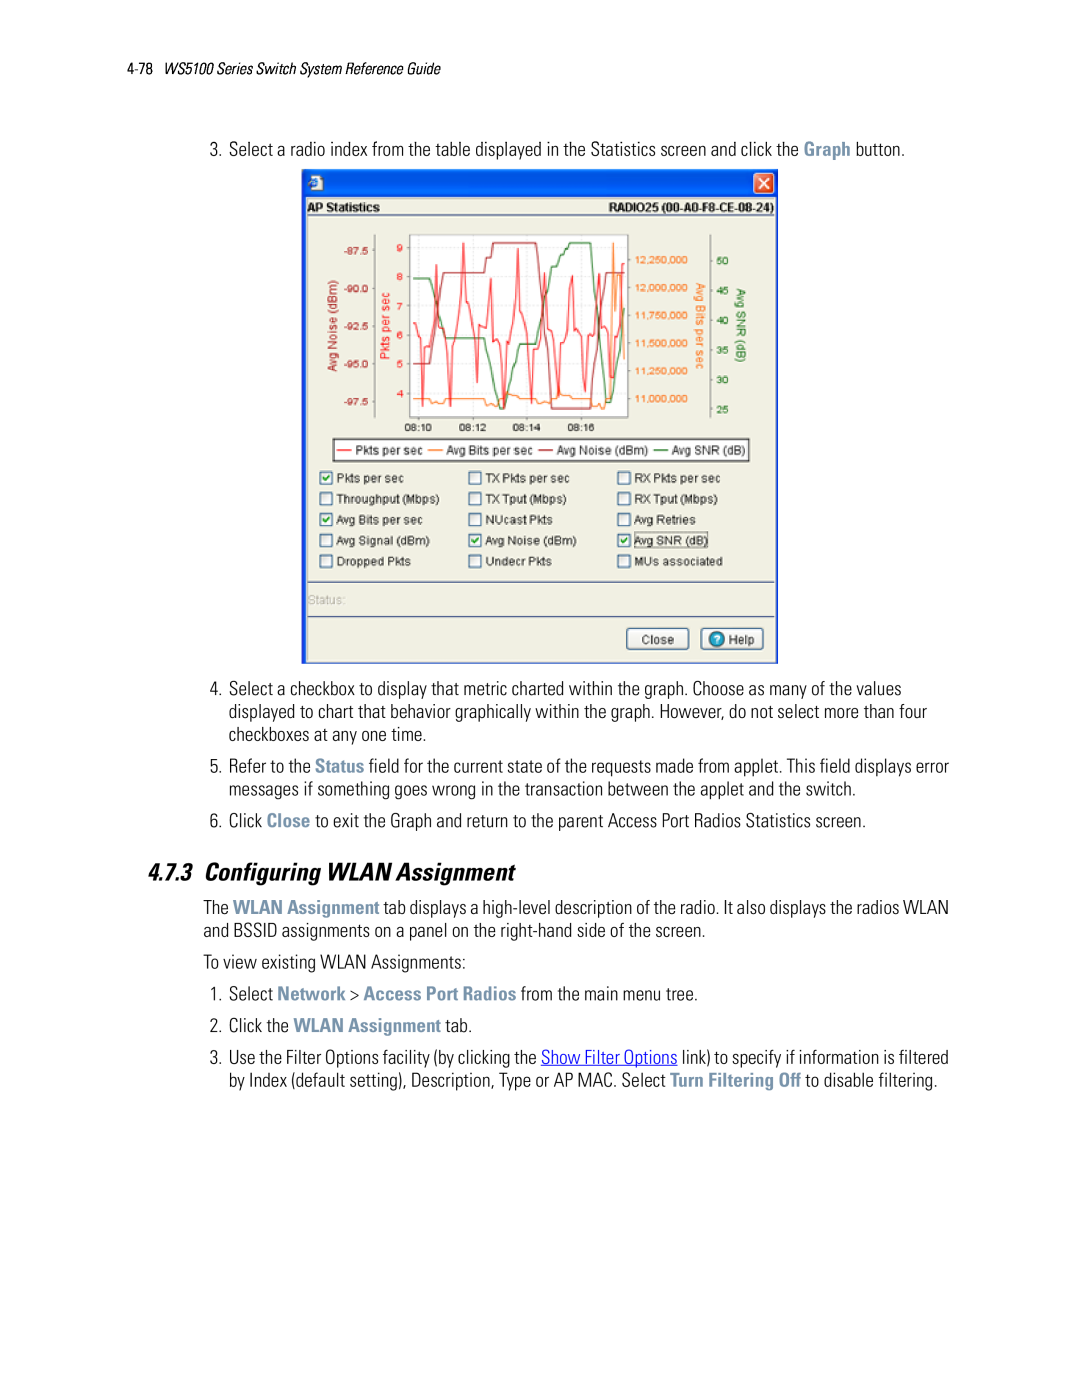 Motorola WS5100 manual 4.7.3Configuring WLAN Assignment, Click the WLAN Assignment tab 